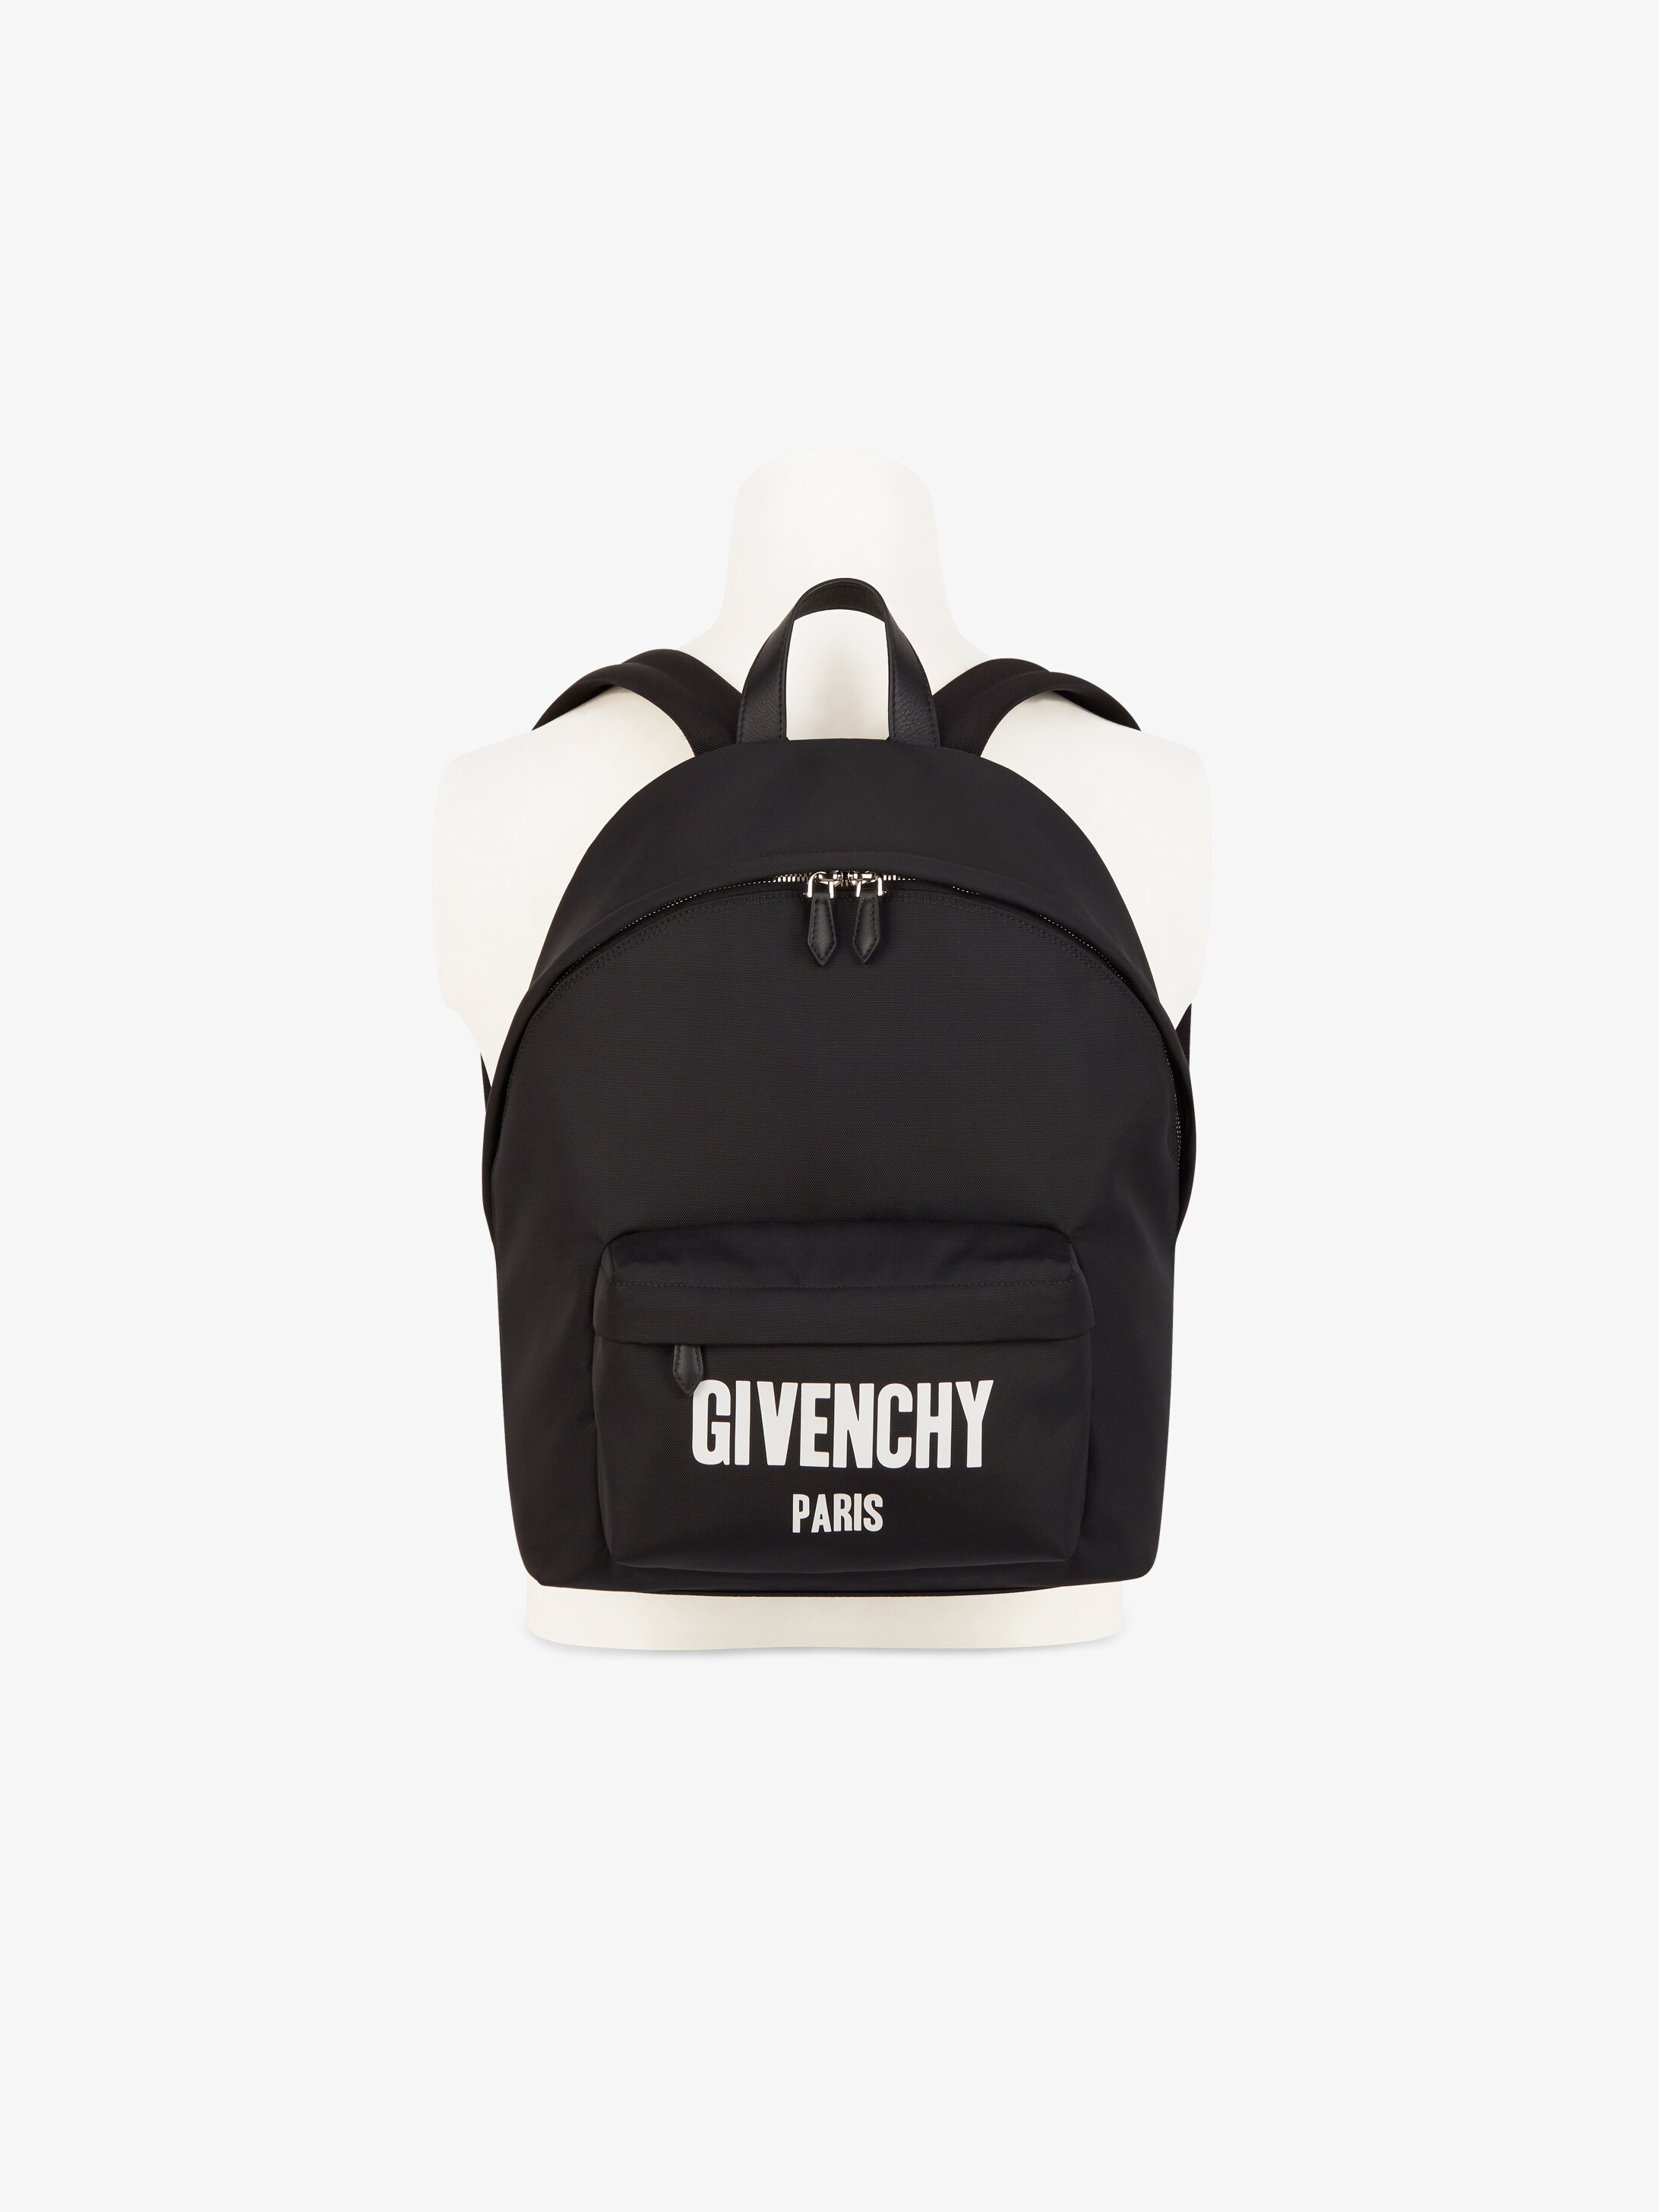 GIVENCHY PARIS printed backpack 